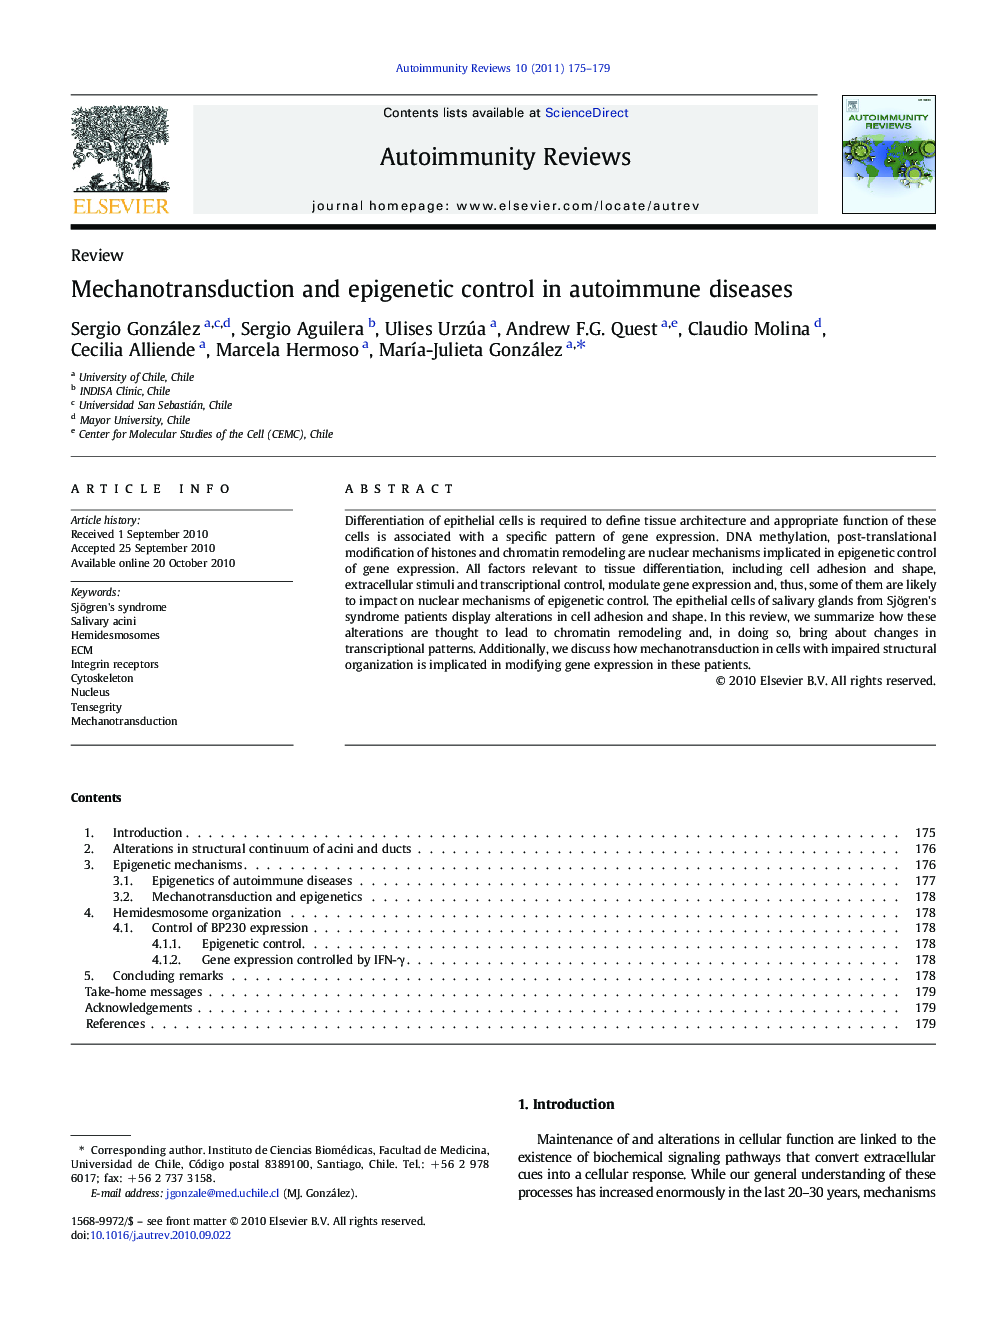 Mechanotransduction and epigenetic control in autoimmune diseases